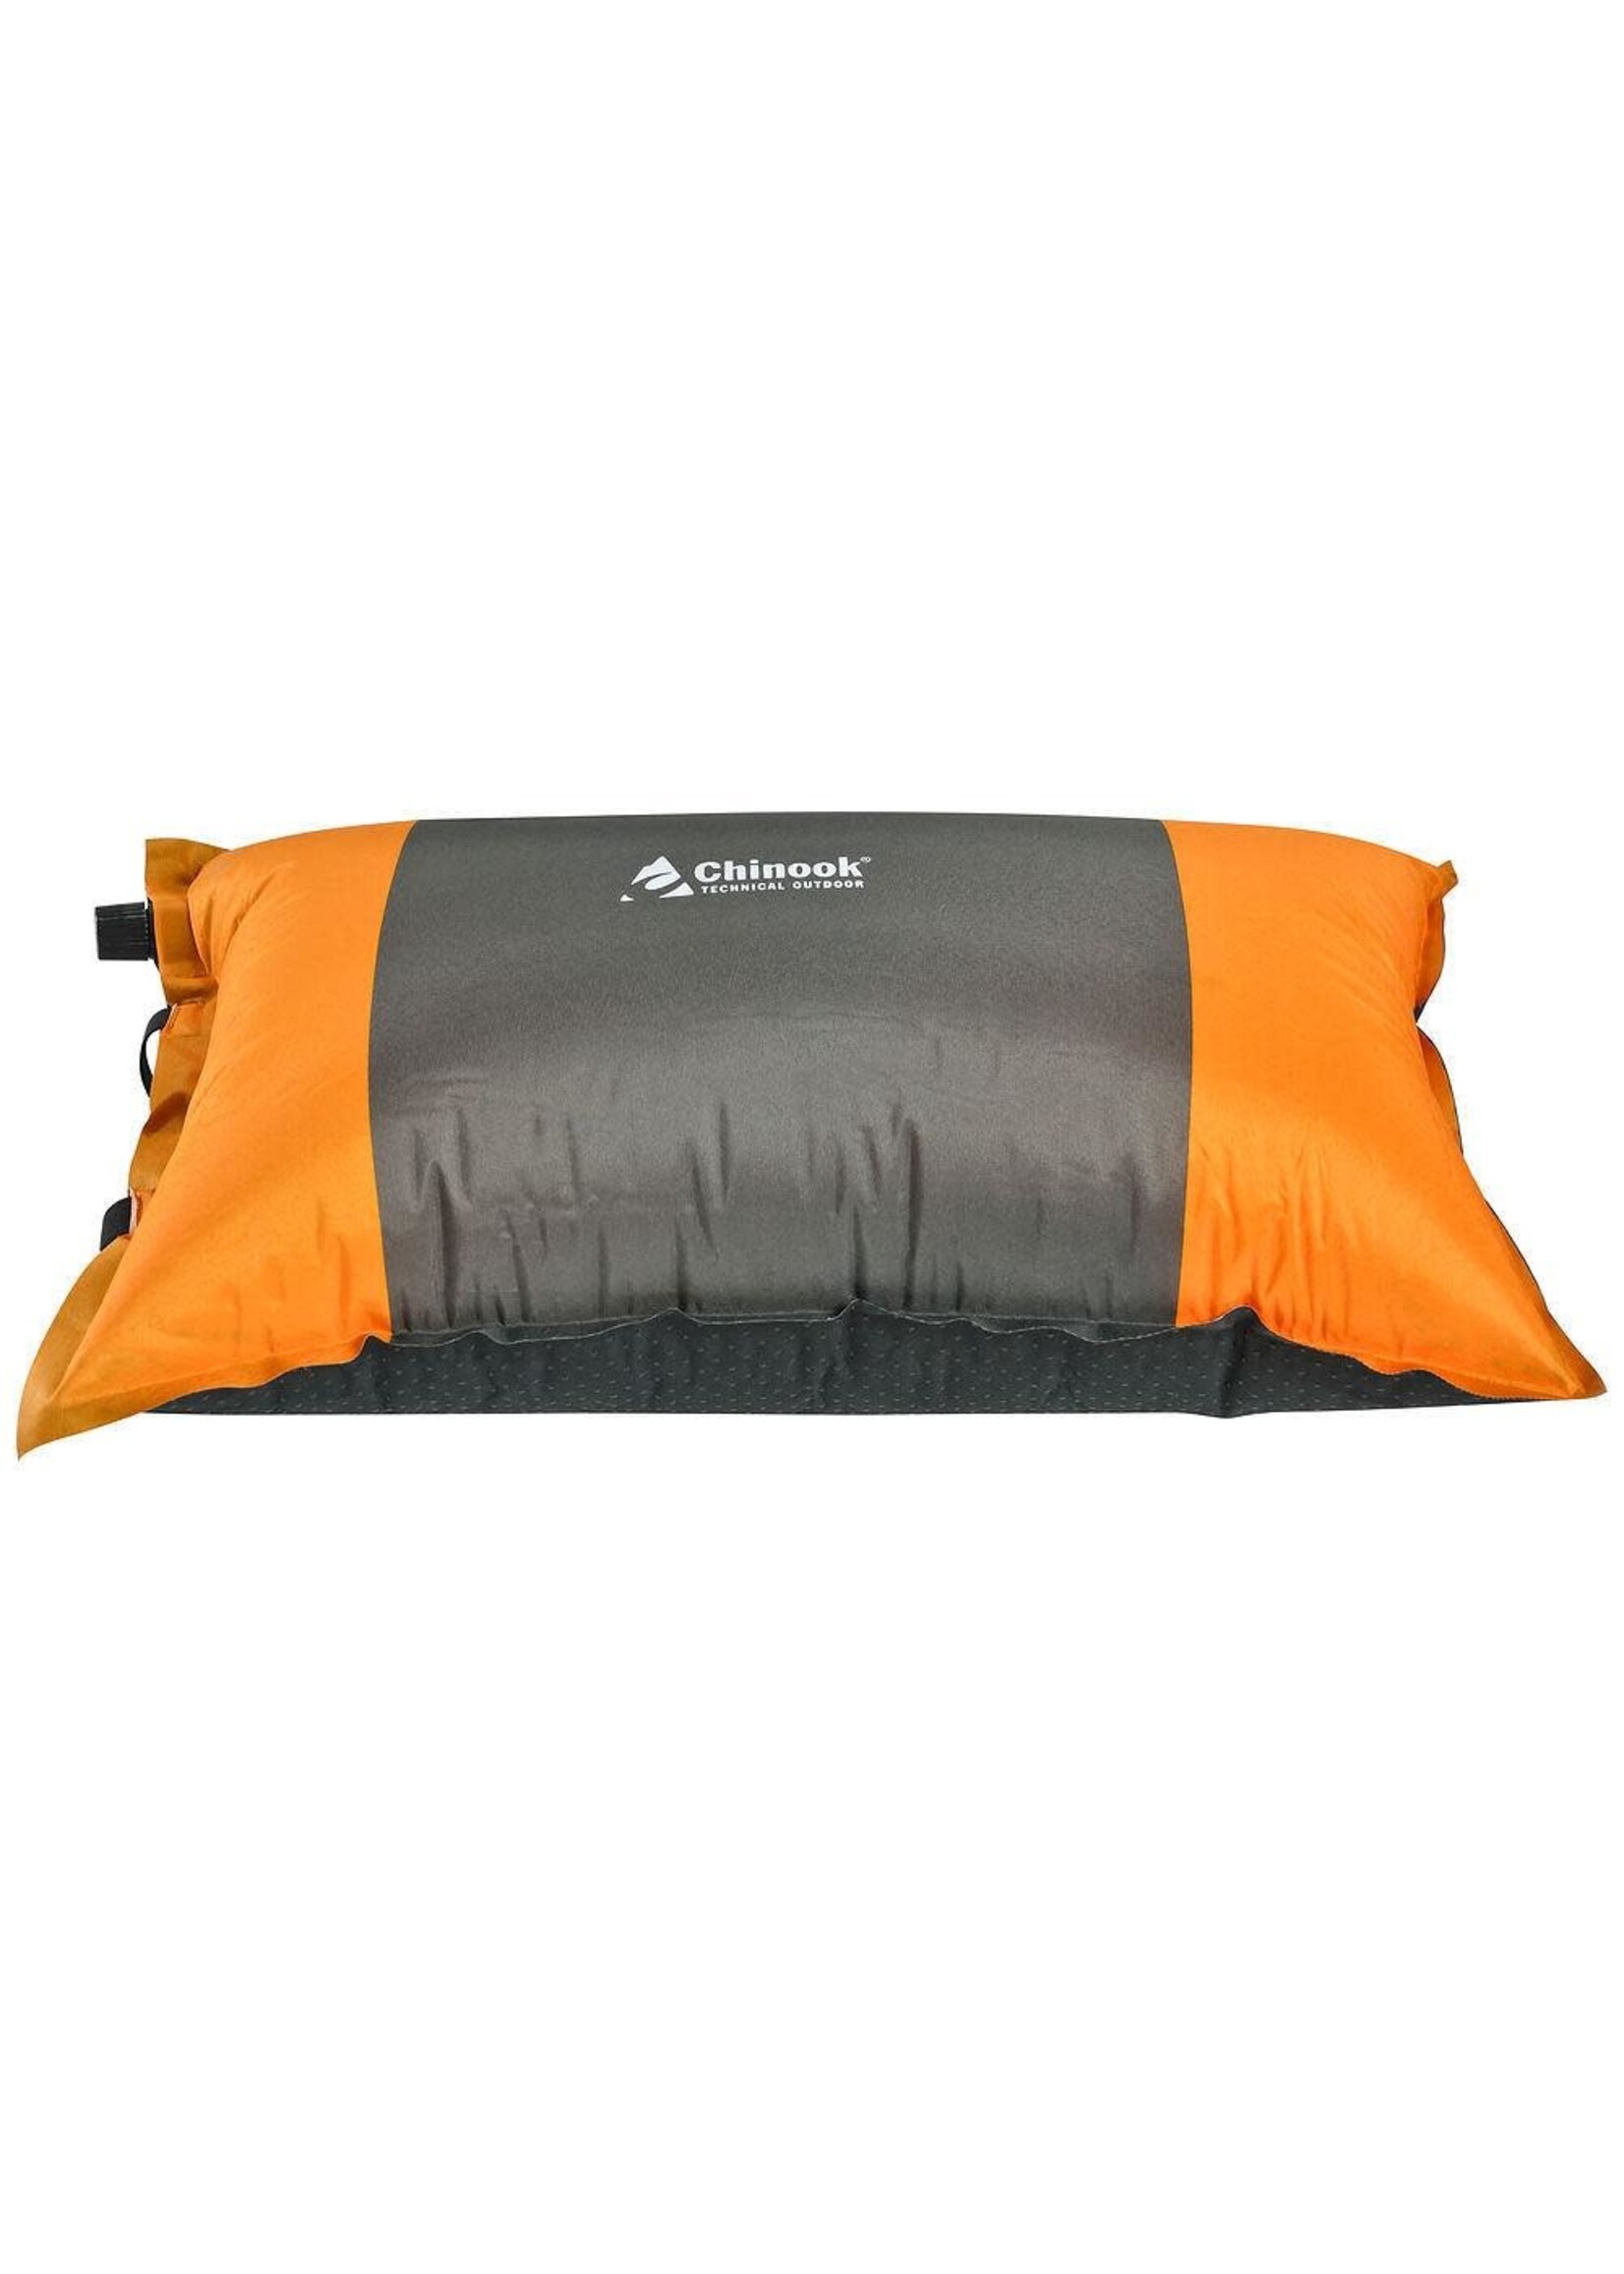 Chinook Chinook Self-Inflating Travel Pillow